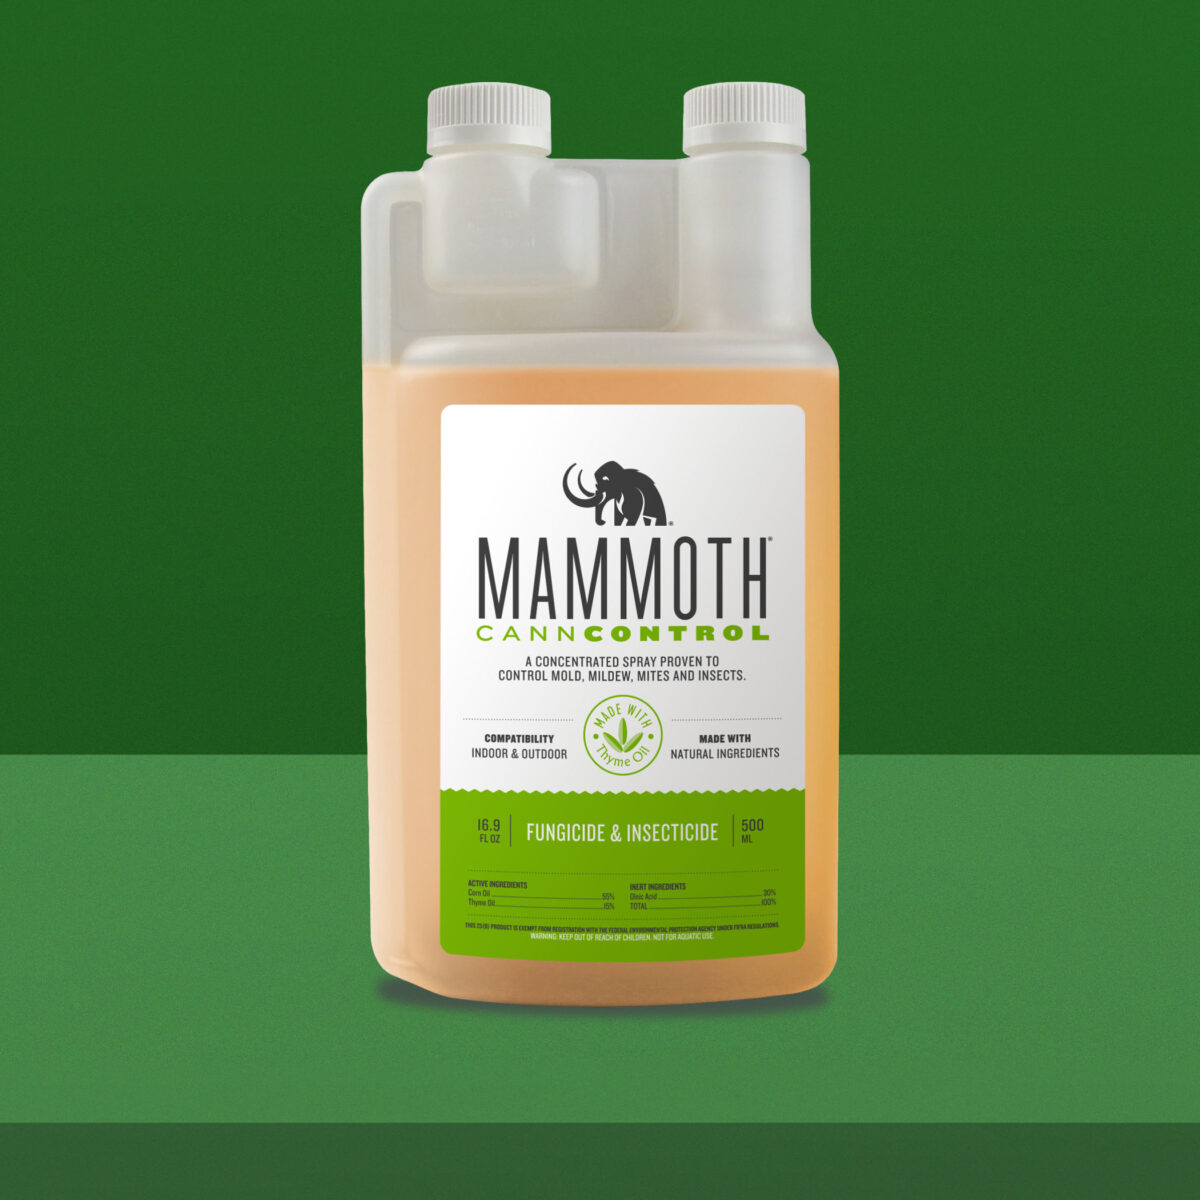 Mammoth CannControl mL Product Image